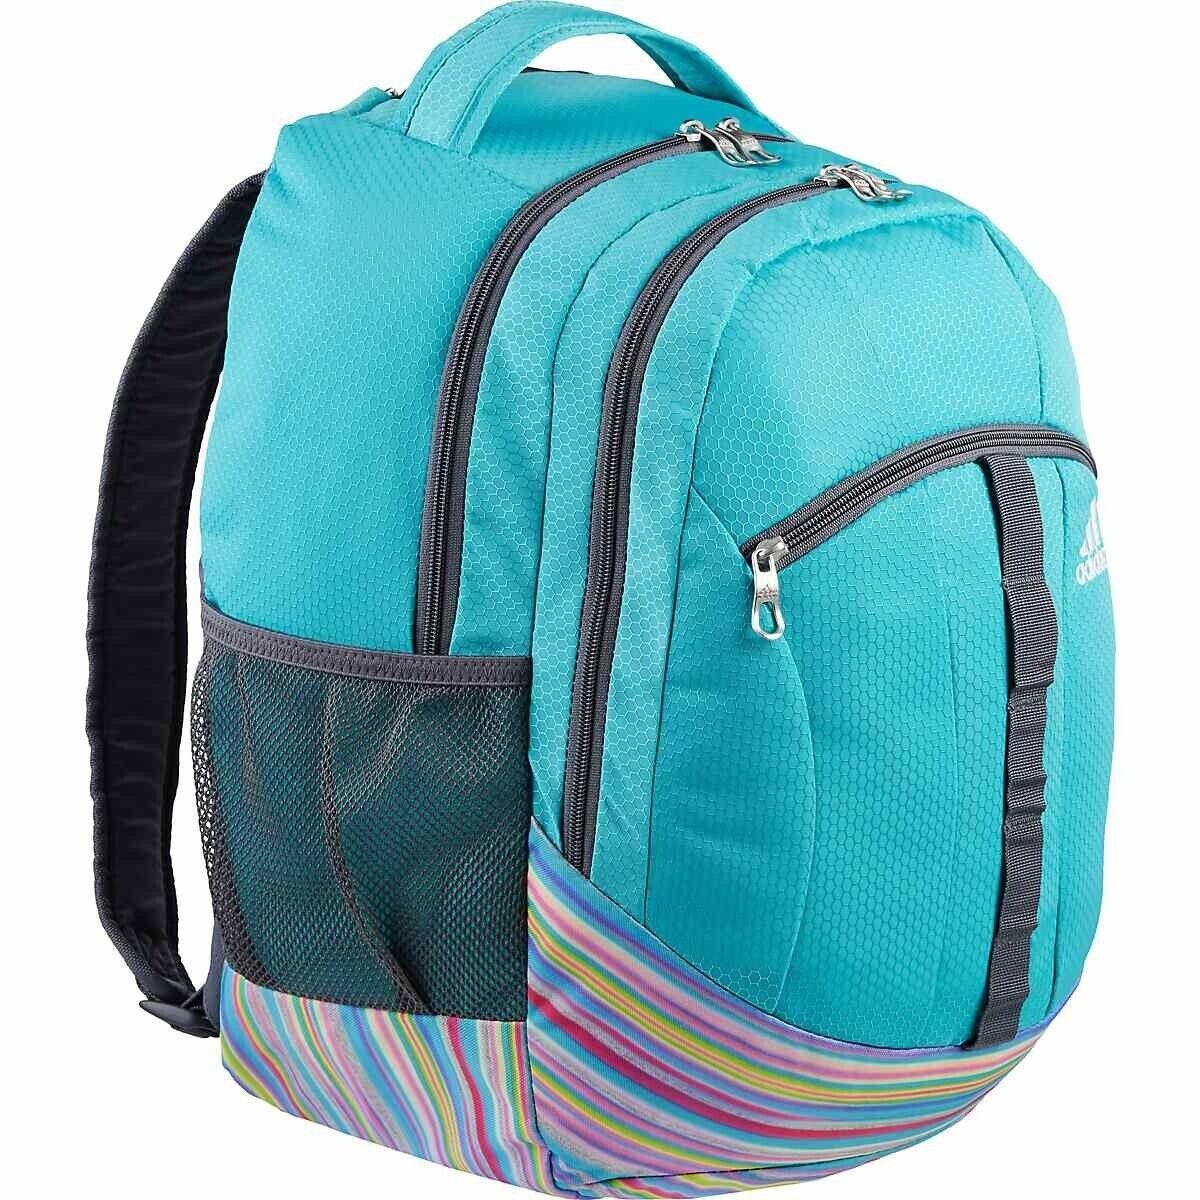 Adidas Stratton XL Backpack Aqua and Rainbow